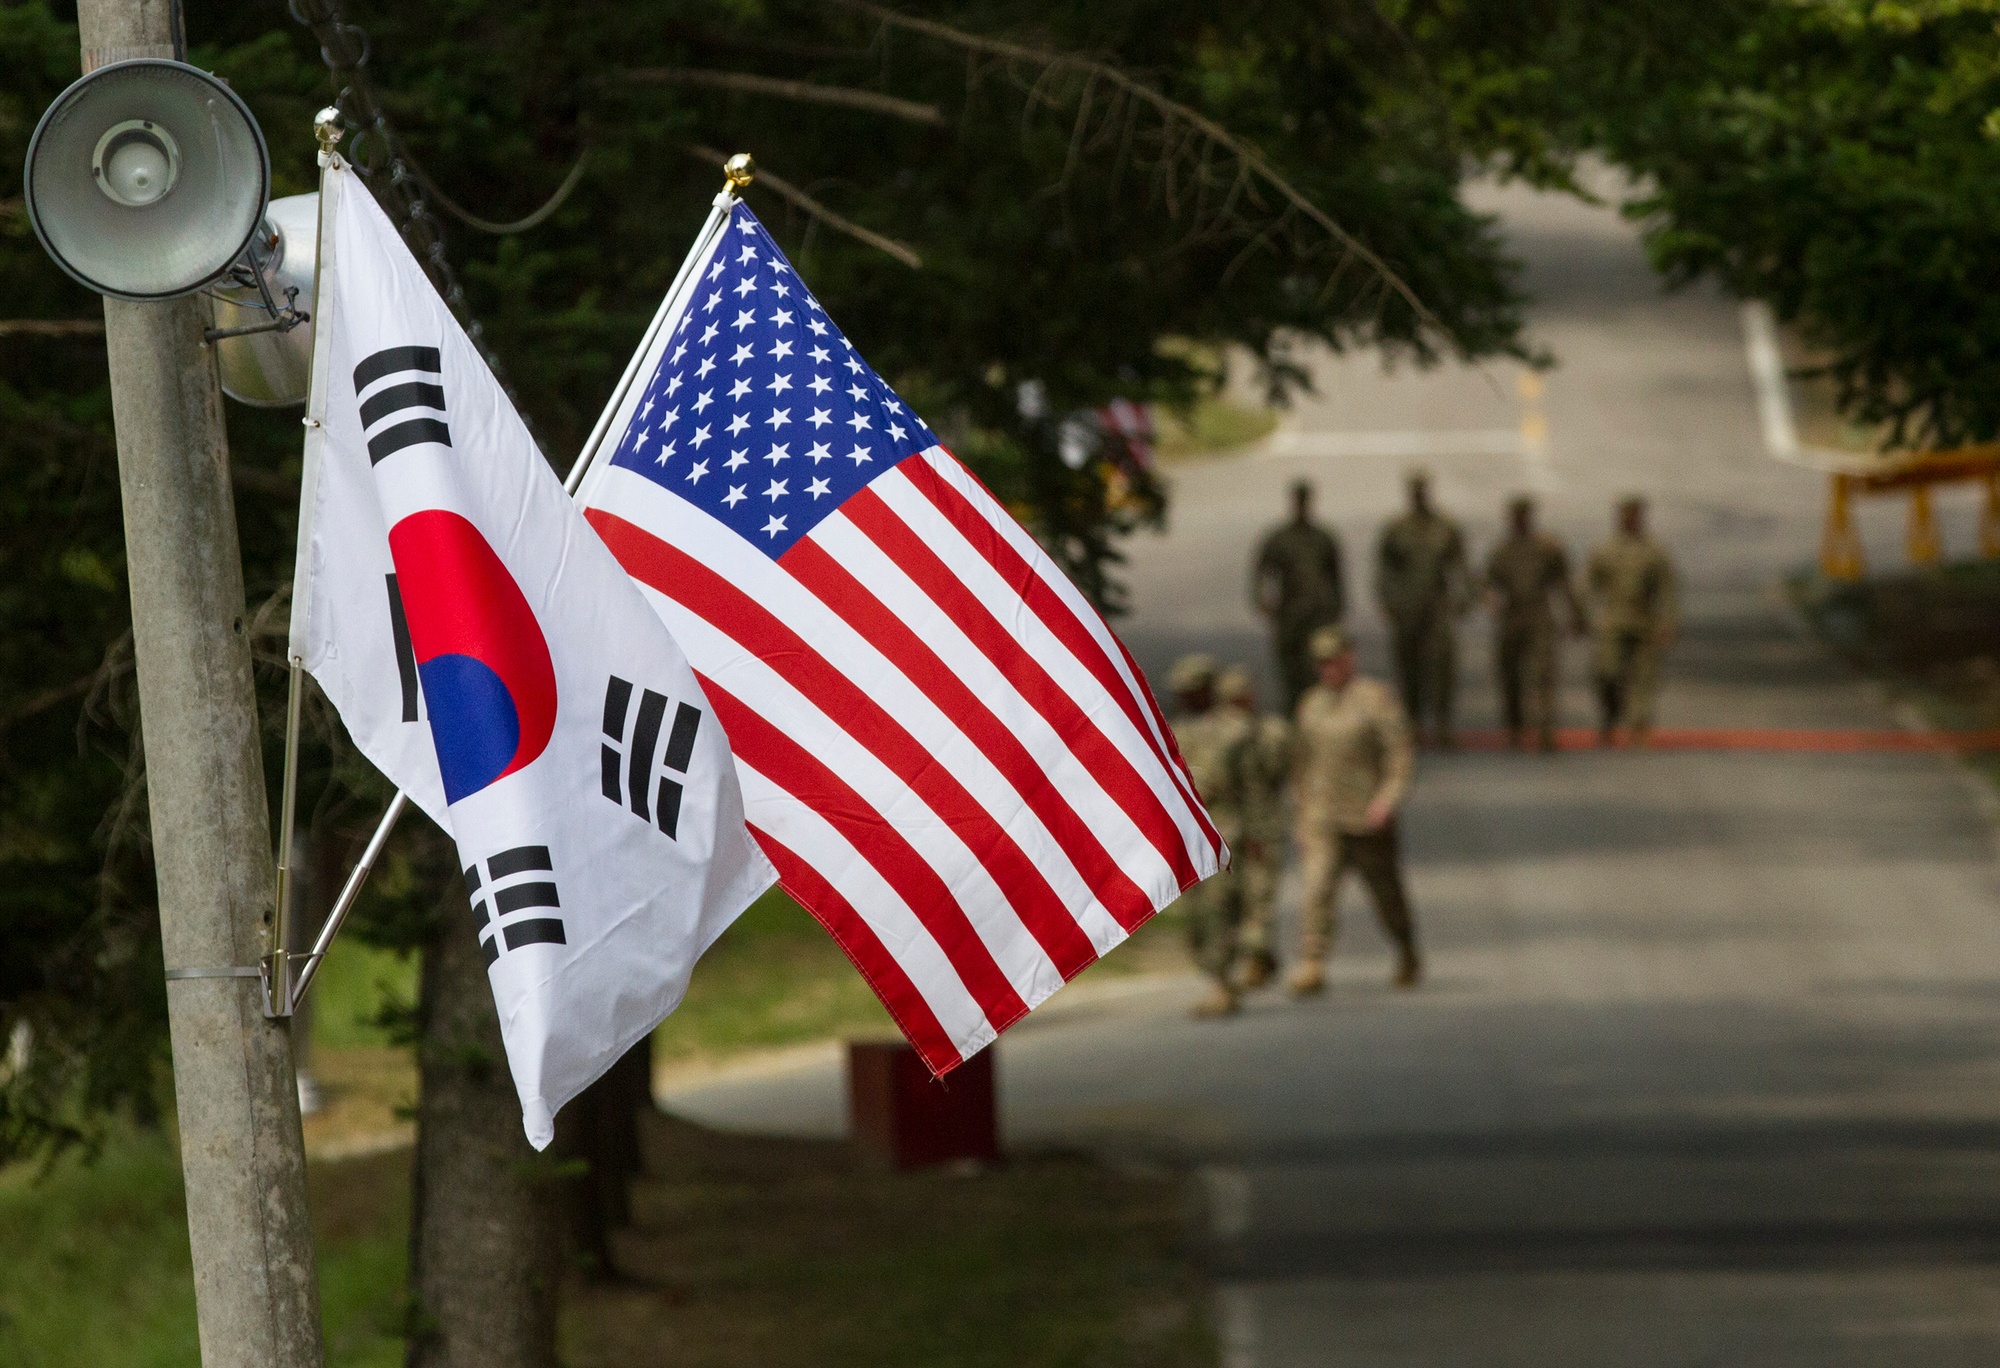 south korean flag